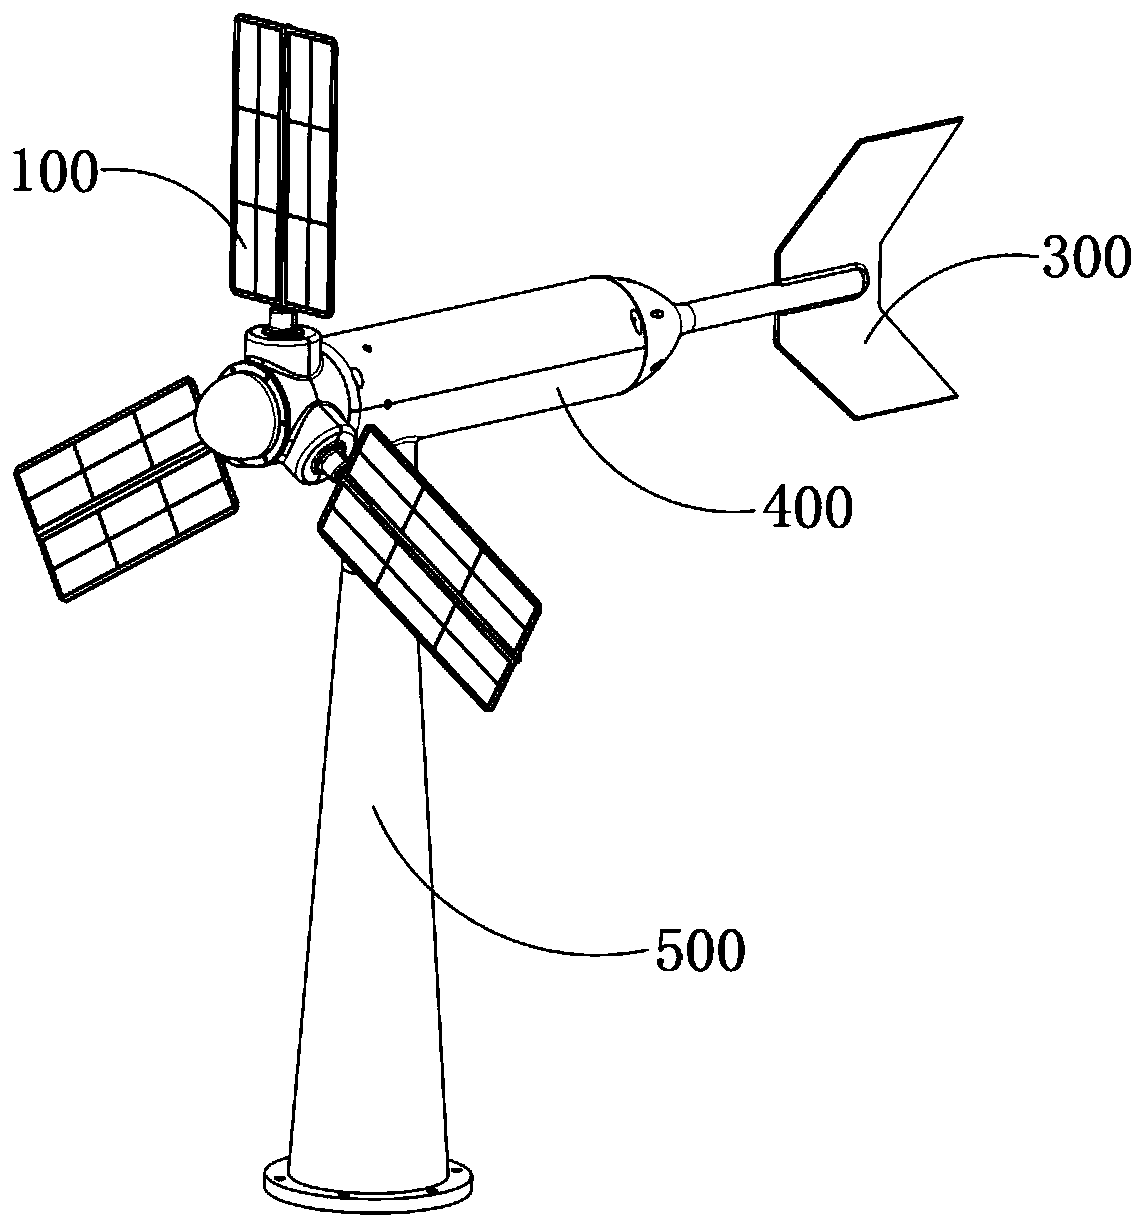 Multi-pitch-varying power generating method of wind driven generator